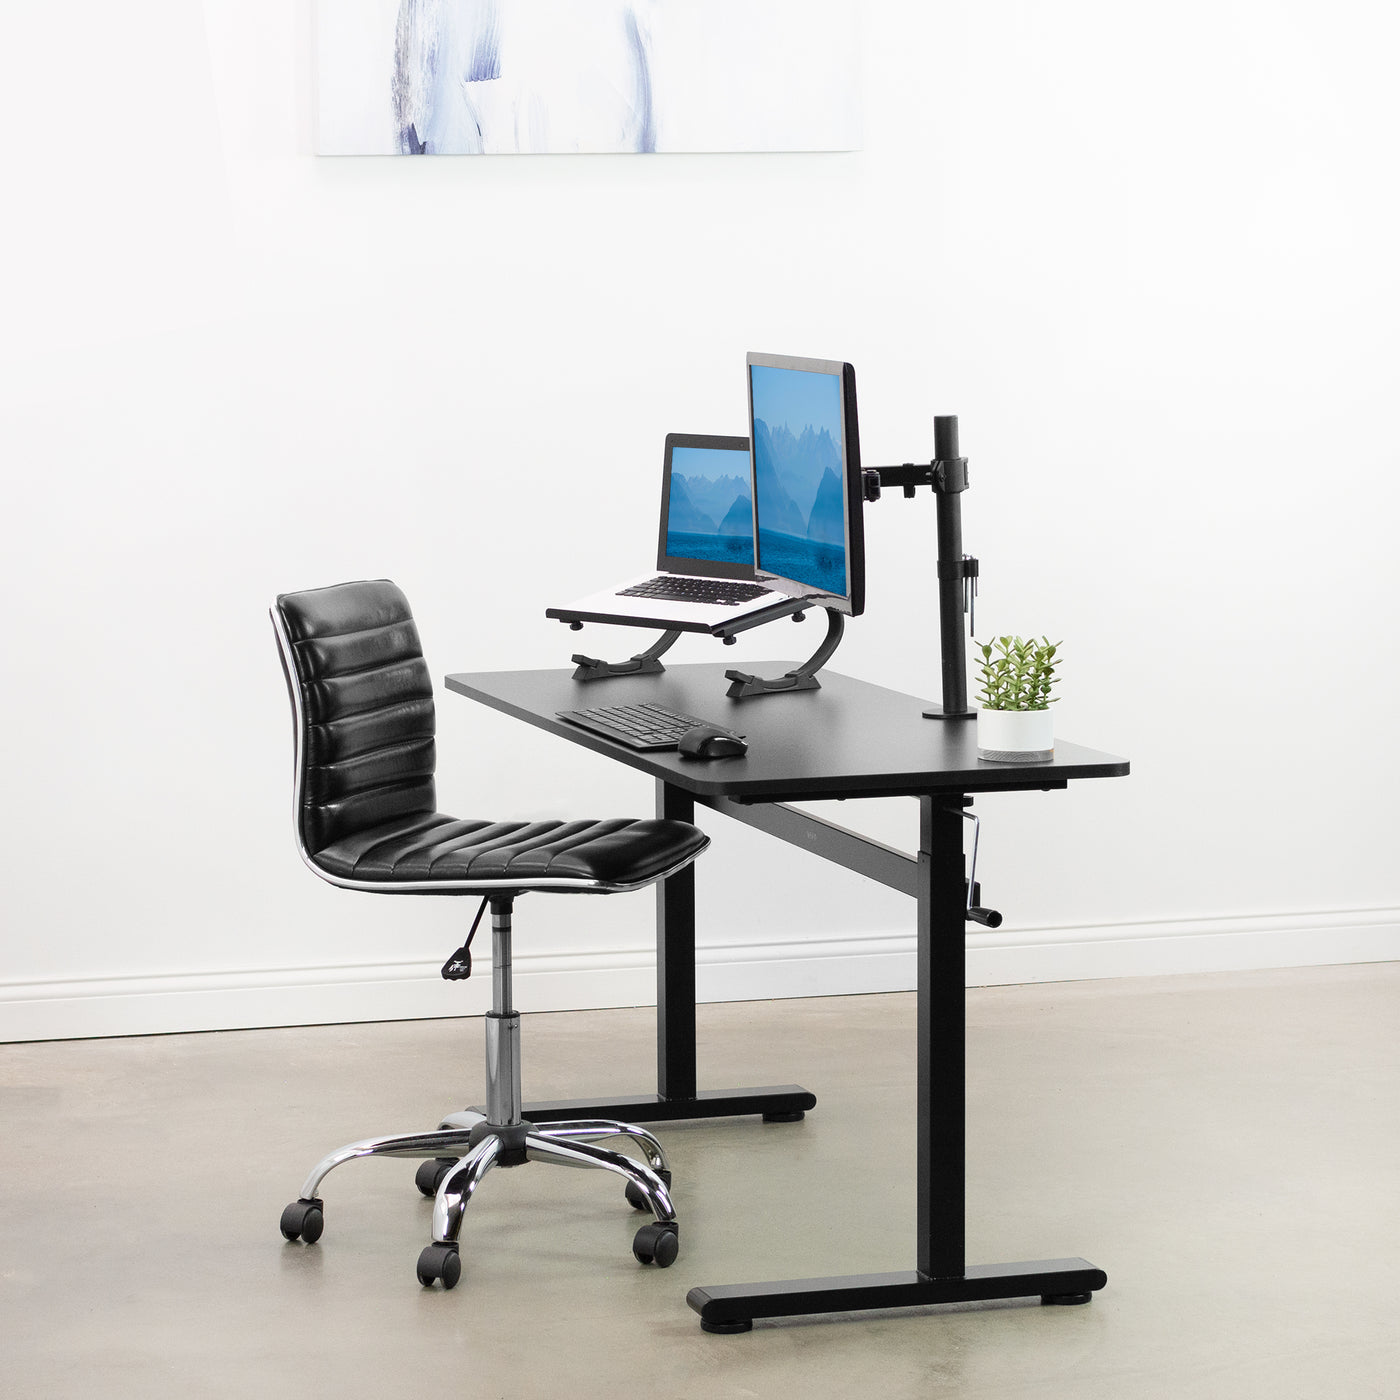 Manual crank desk in a minimalist office space.